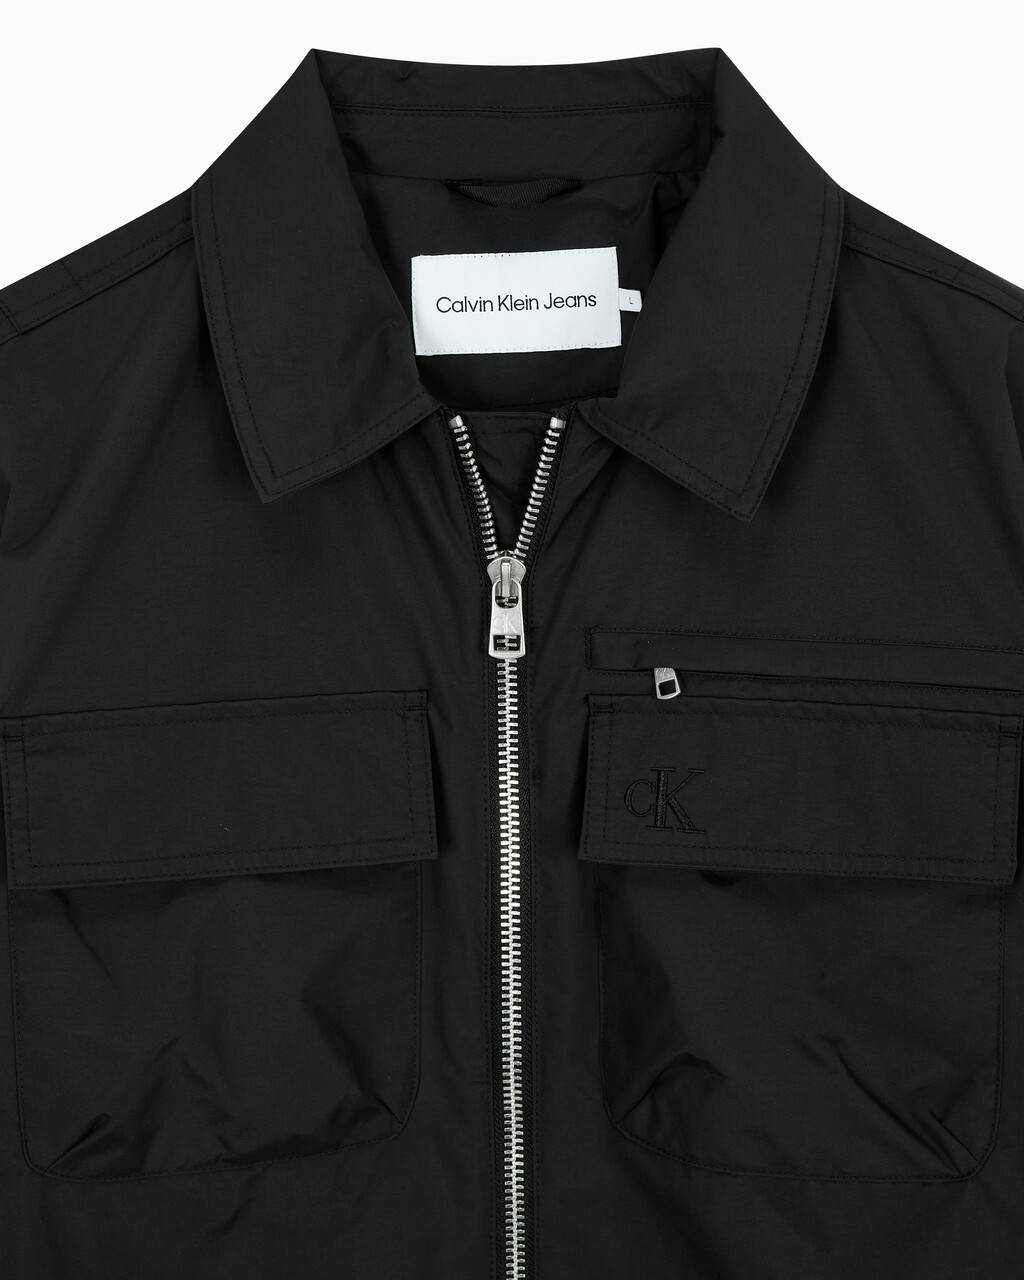 Buy 남성 테크 셔츠 자켓 in color CK BLACK